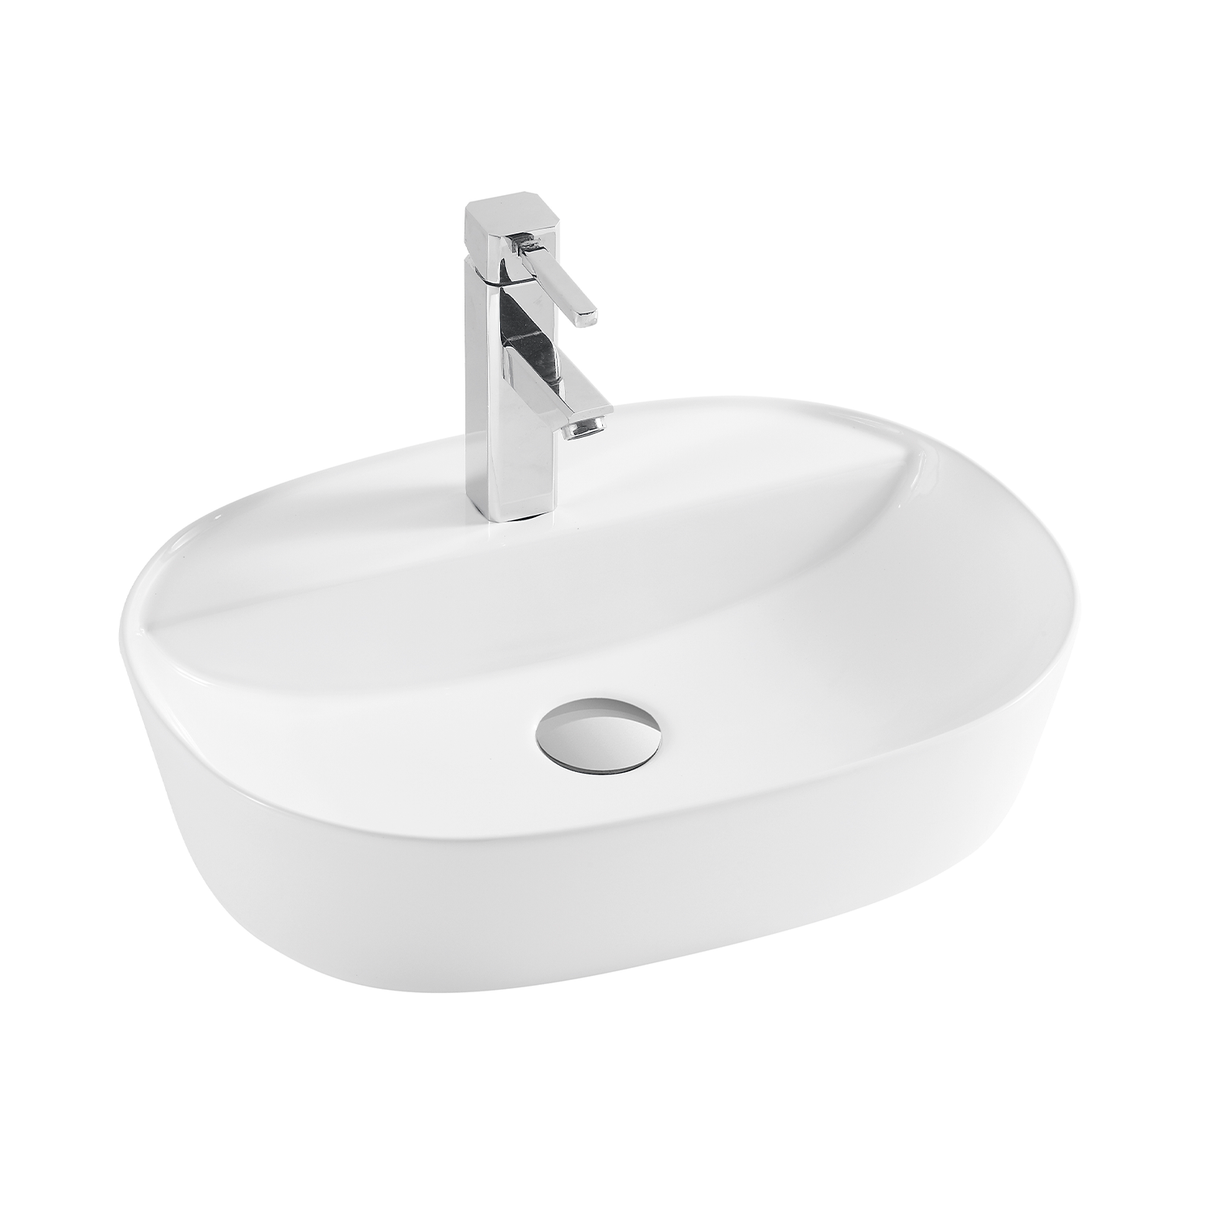 DAX Ceramic Oval Bathroom Vessel Basin, 20", White Glossy DAX-CL1291-WG